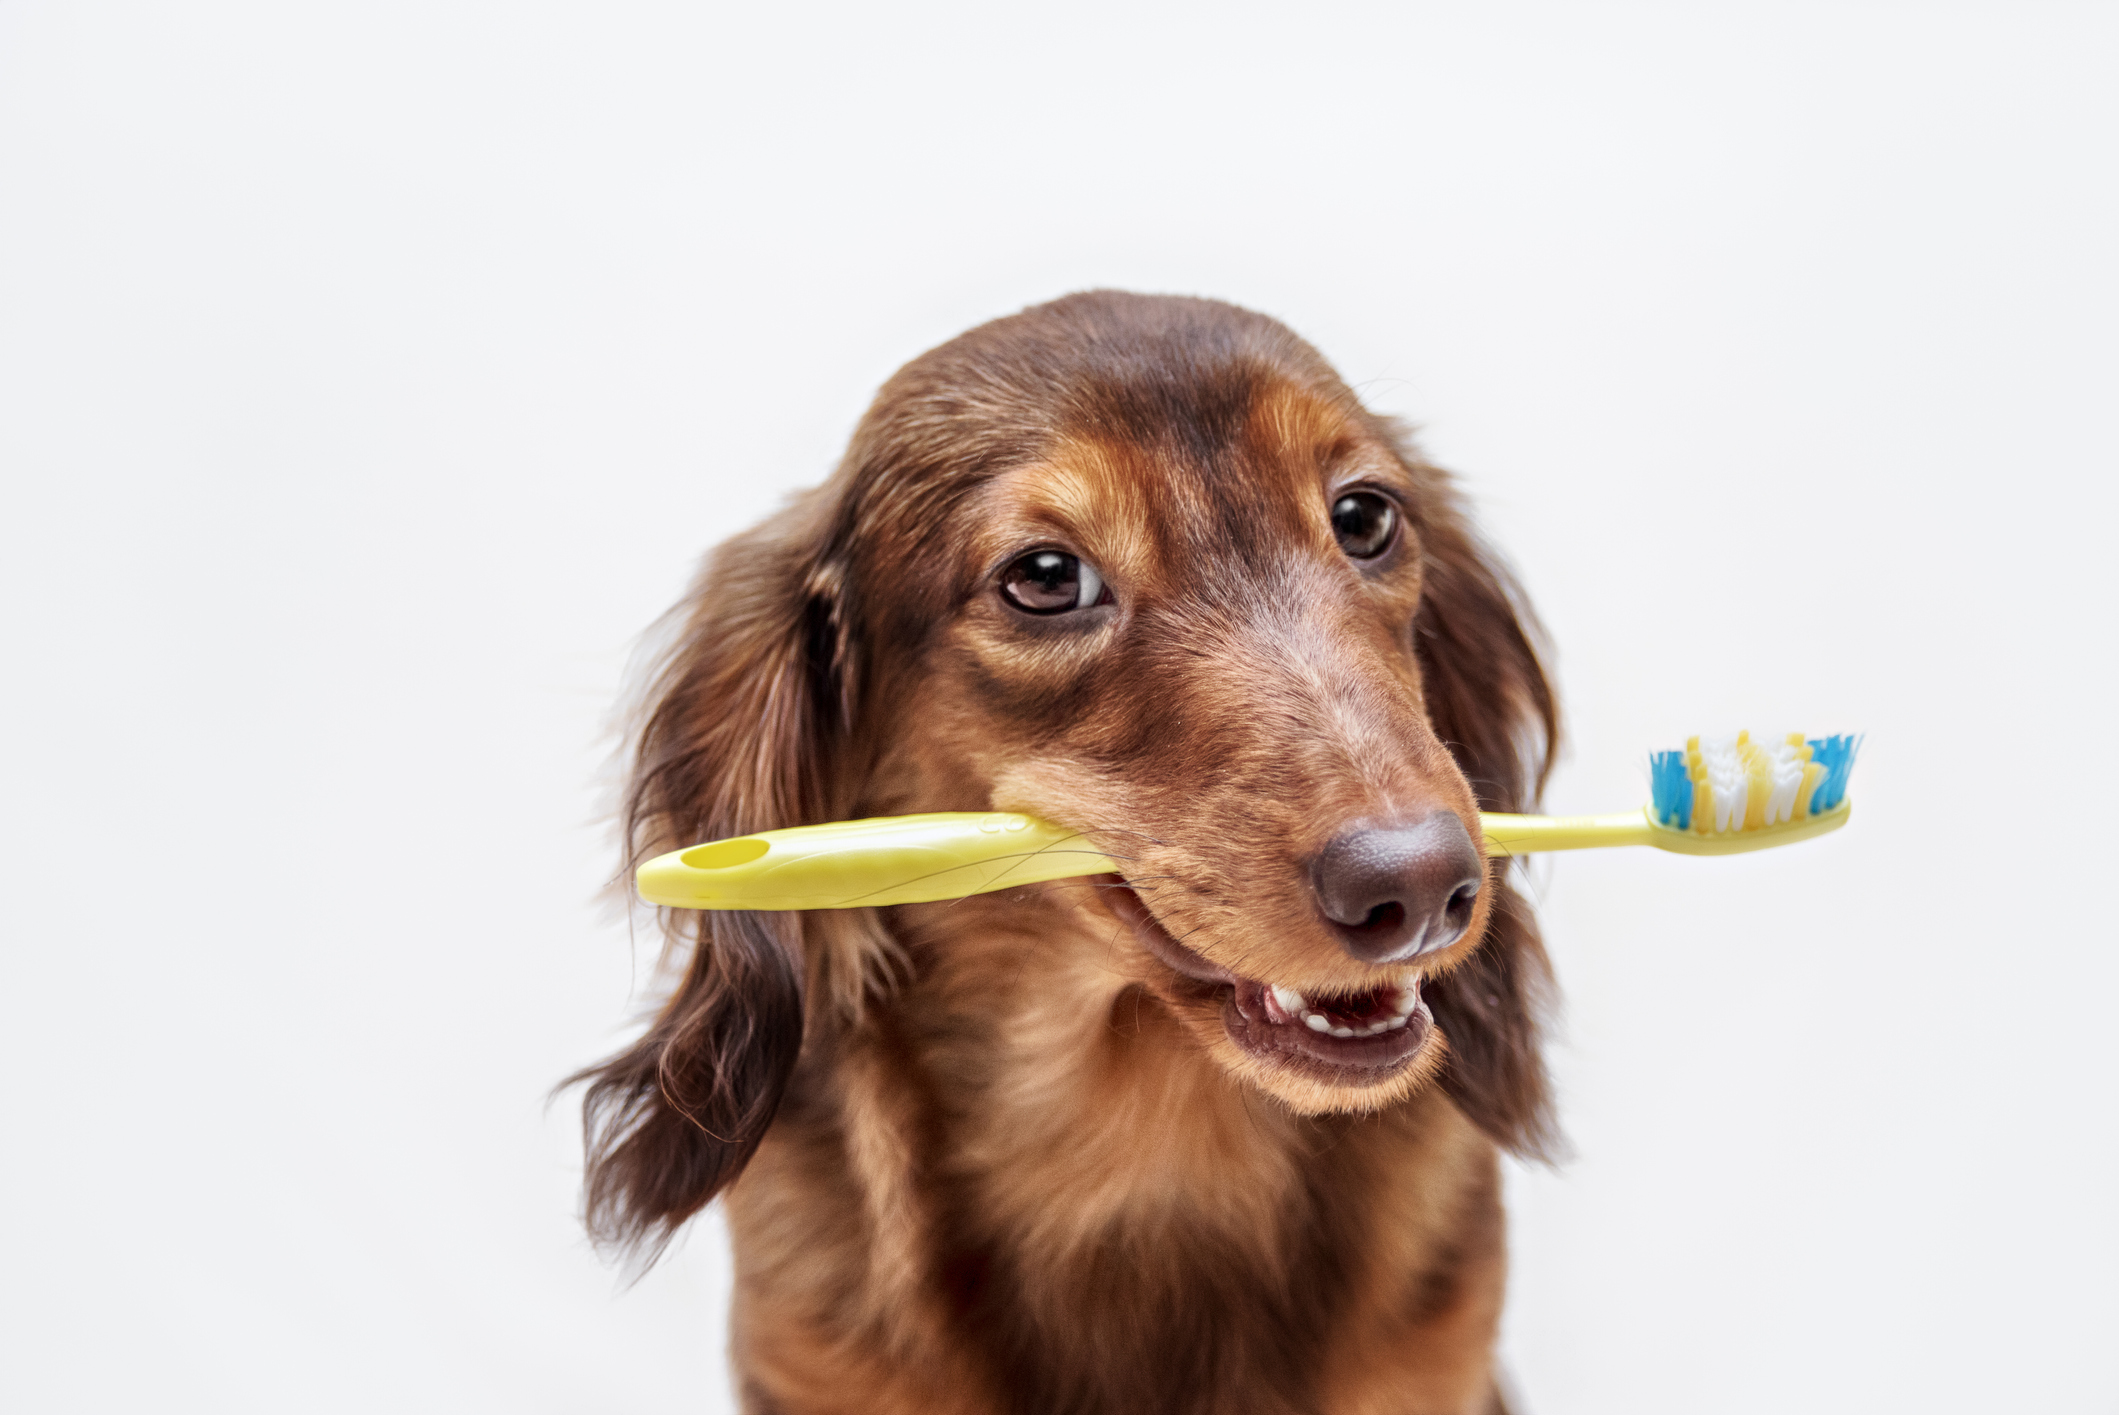 Handmade dog treat toy …  Diy dog food, Dog treat toys, Homemade dog toys